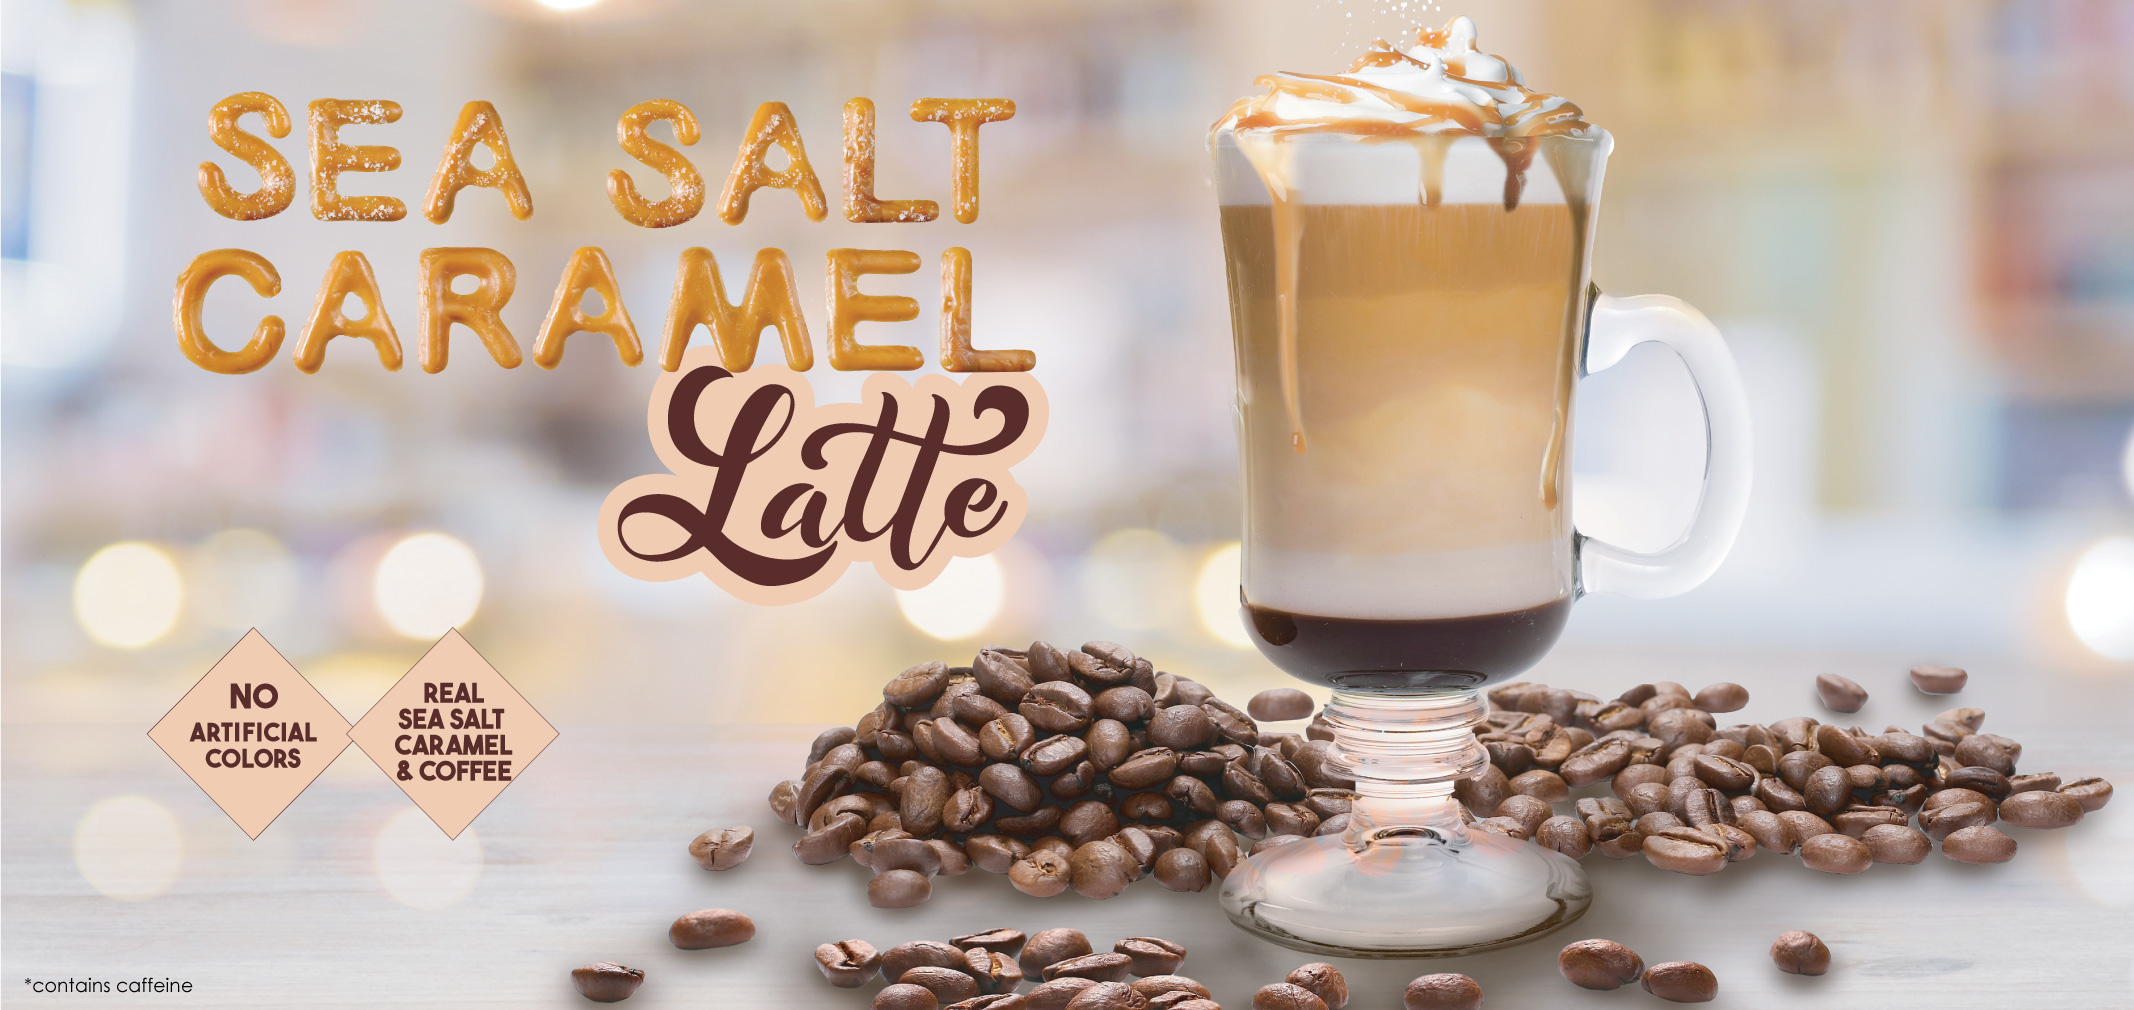 Sea Salt Caramel Latte label image